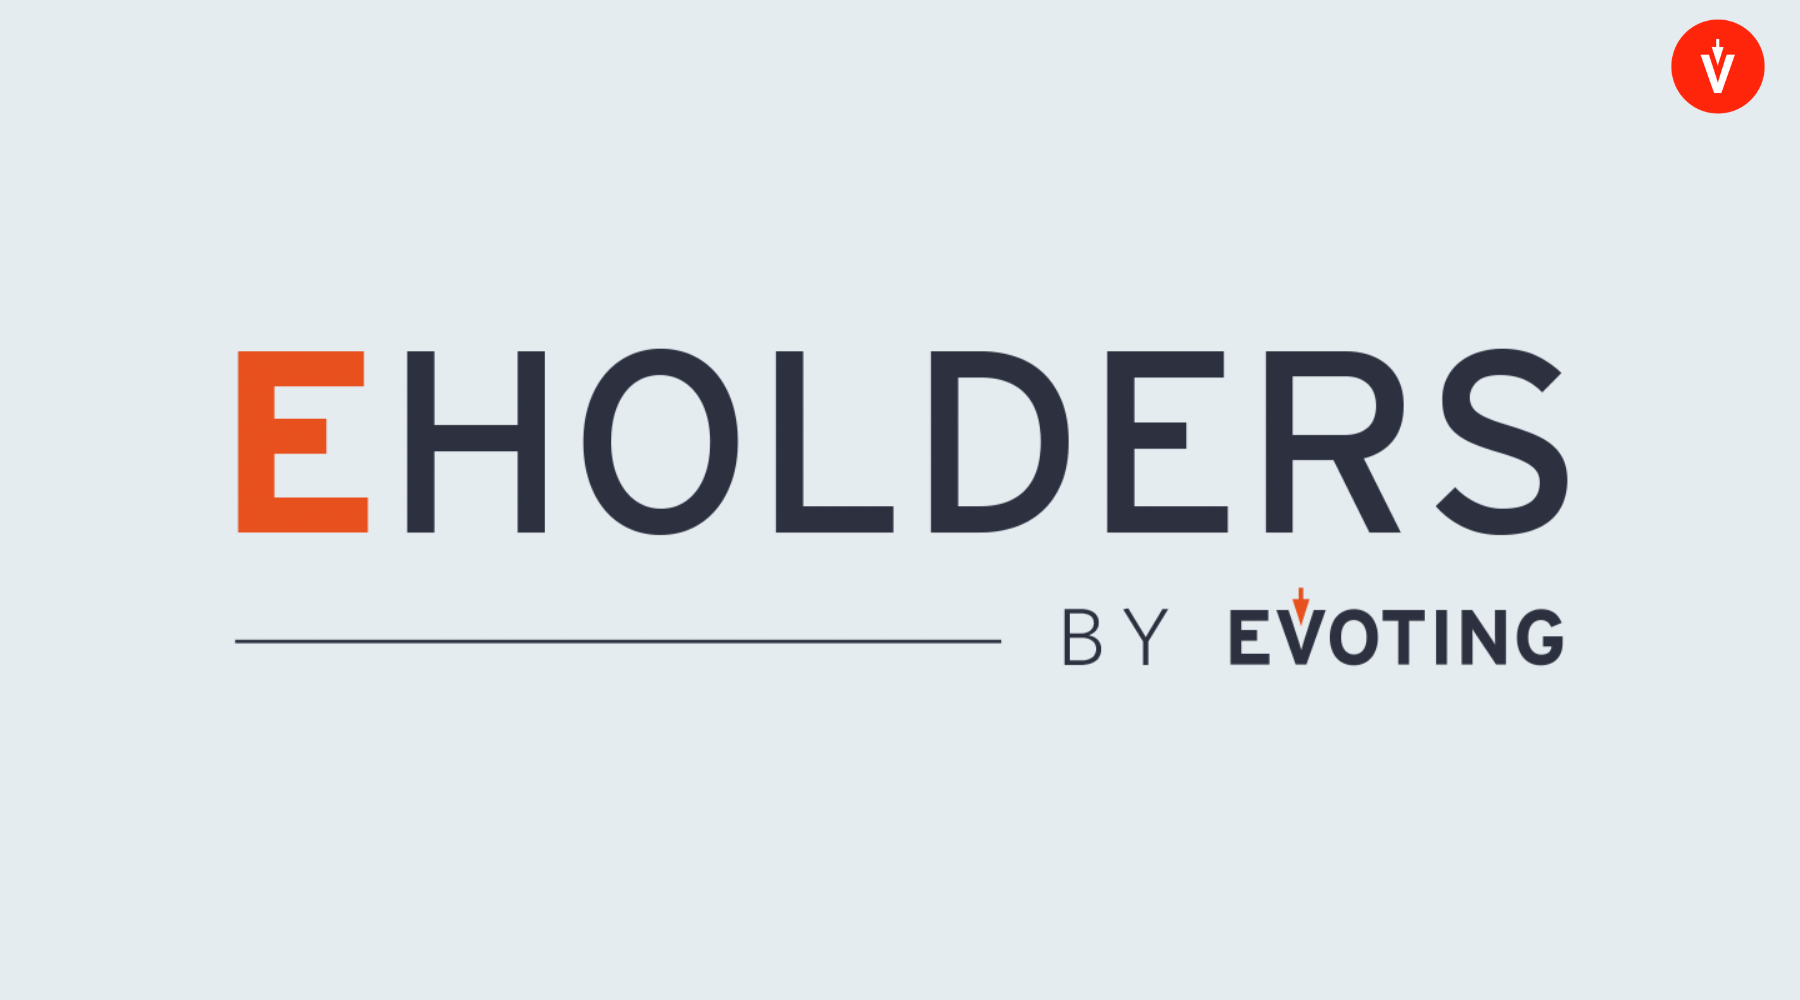 Logo de EHolders, plataforma de votación de EVoting